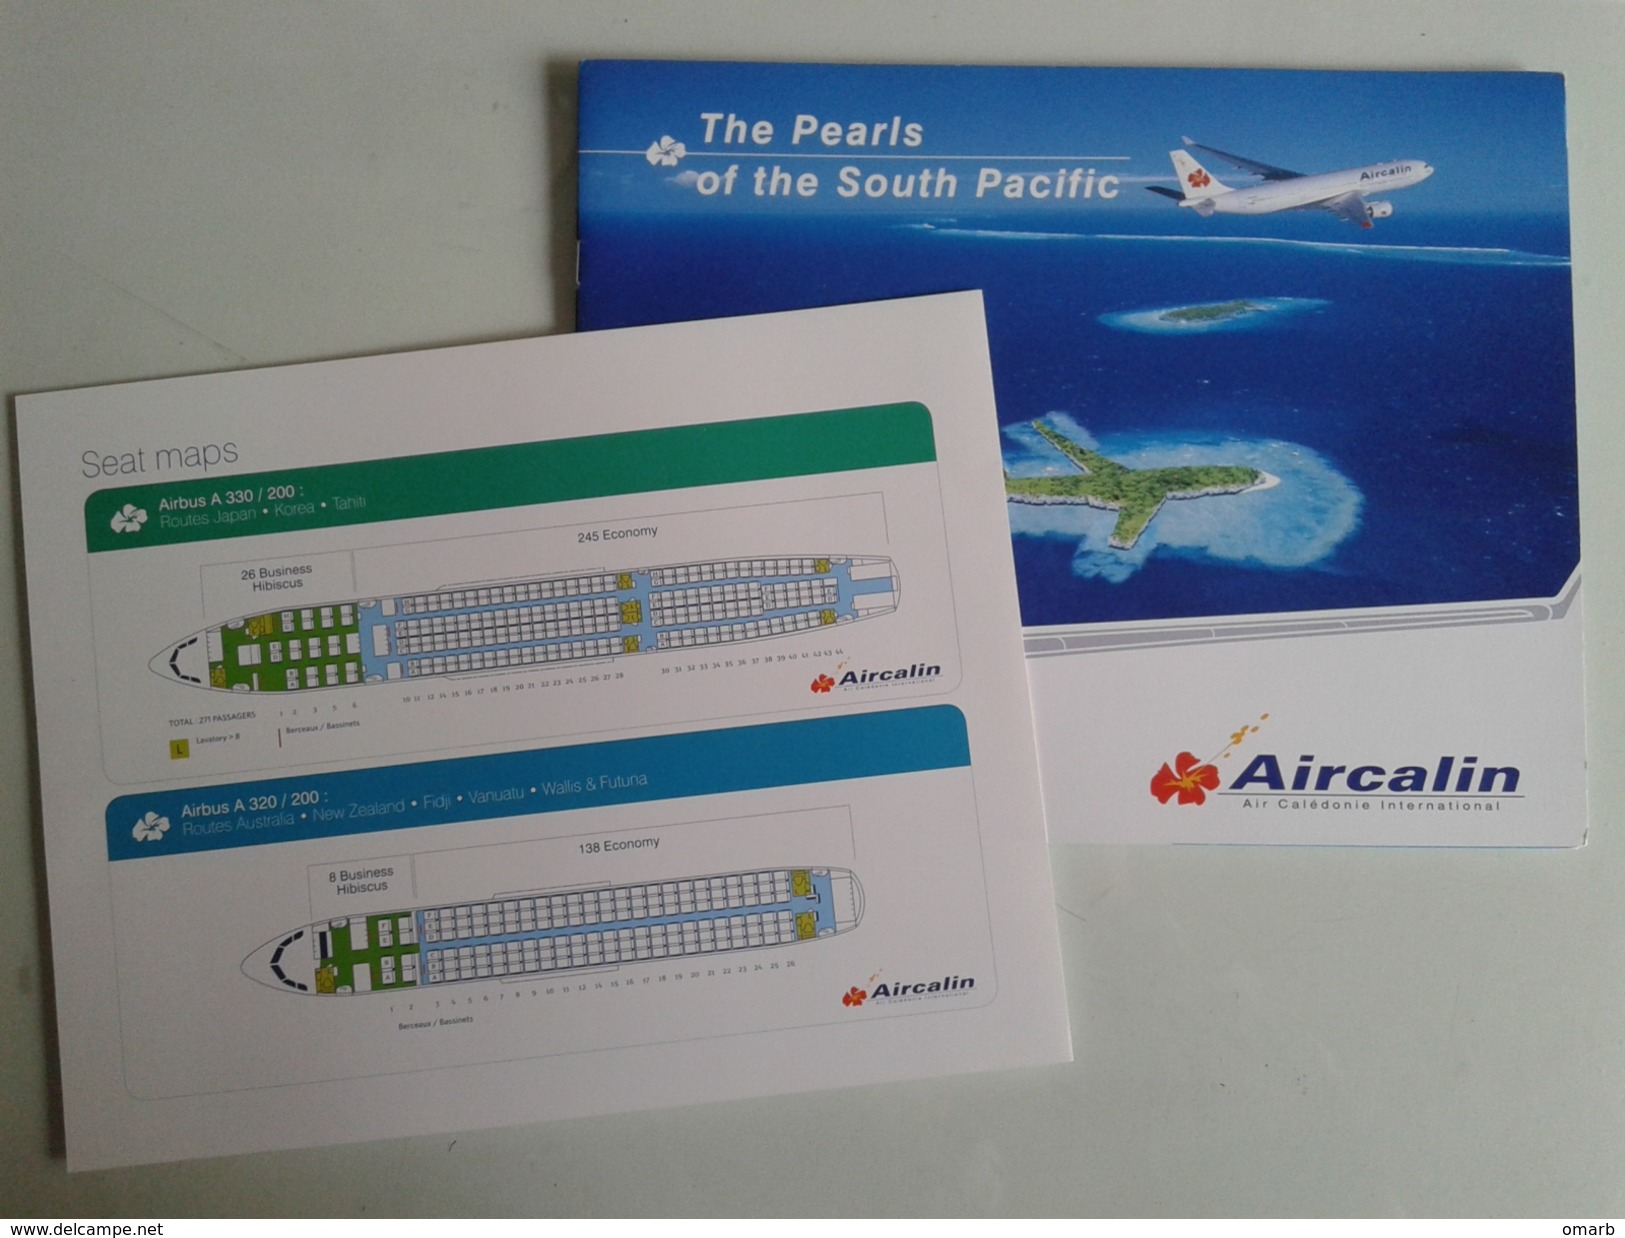 Alt982 Aircalin Air Caledonie International Airlines Flights Airbus Pacific Japan Tahiti Australia Fiji Vanuatu Plane - Cadeaux Promotionnels